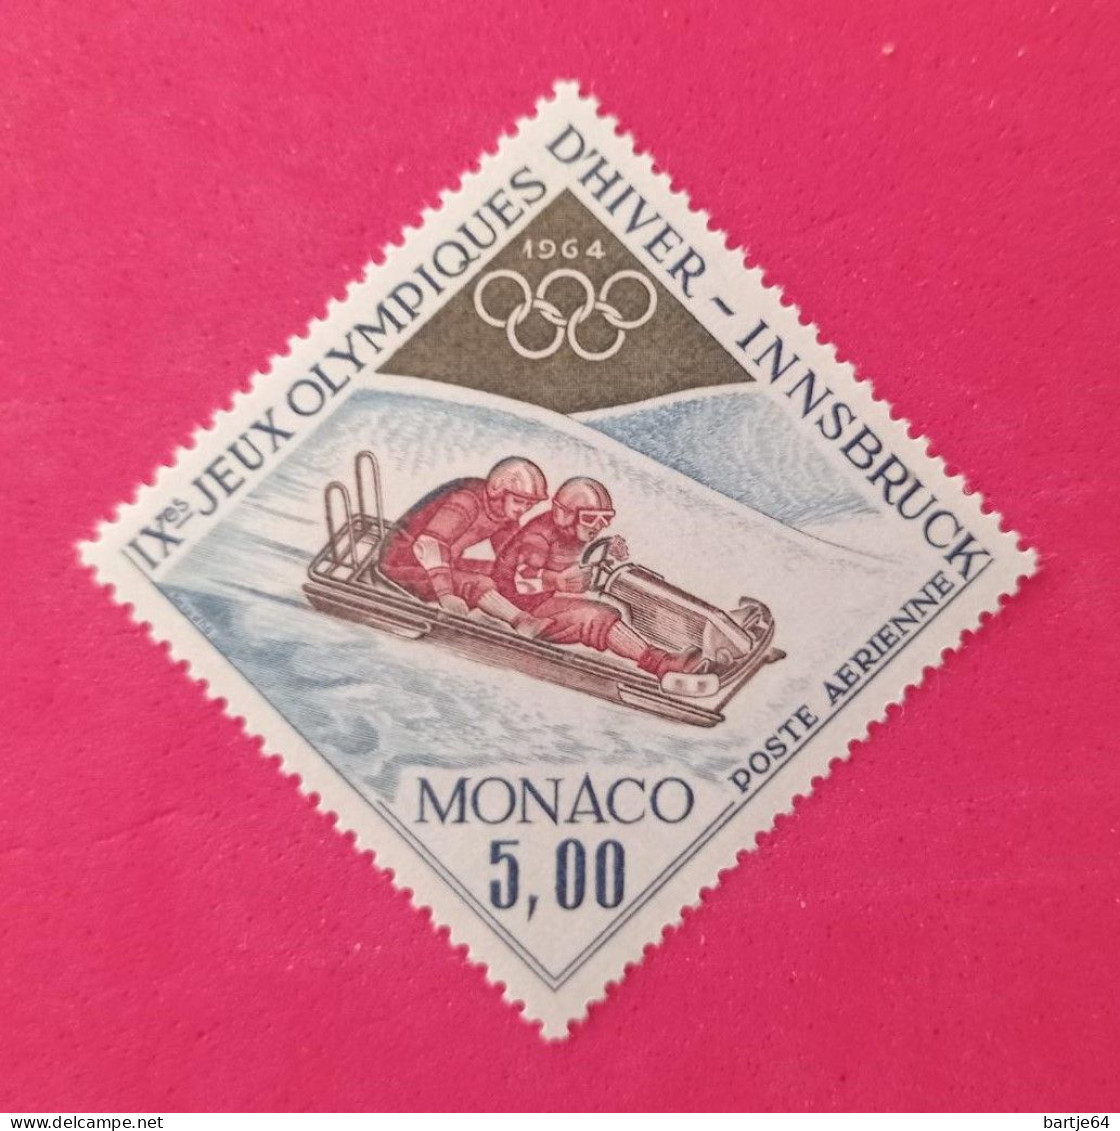 1964 Monaco - Stamp MNH - Hiver 1964: Innsbruck